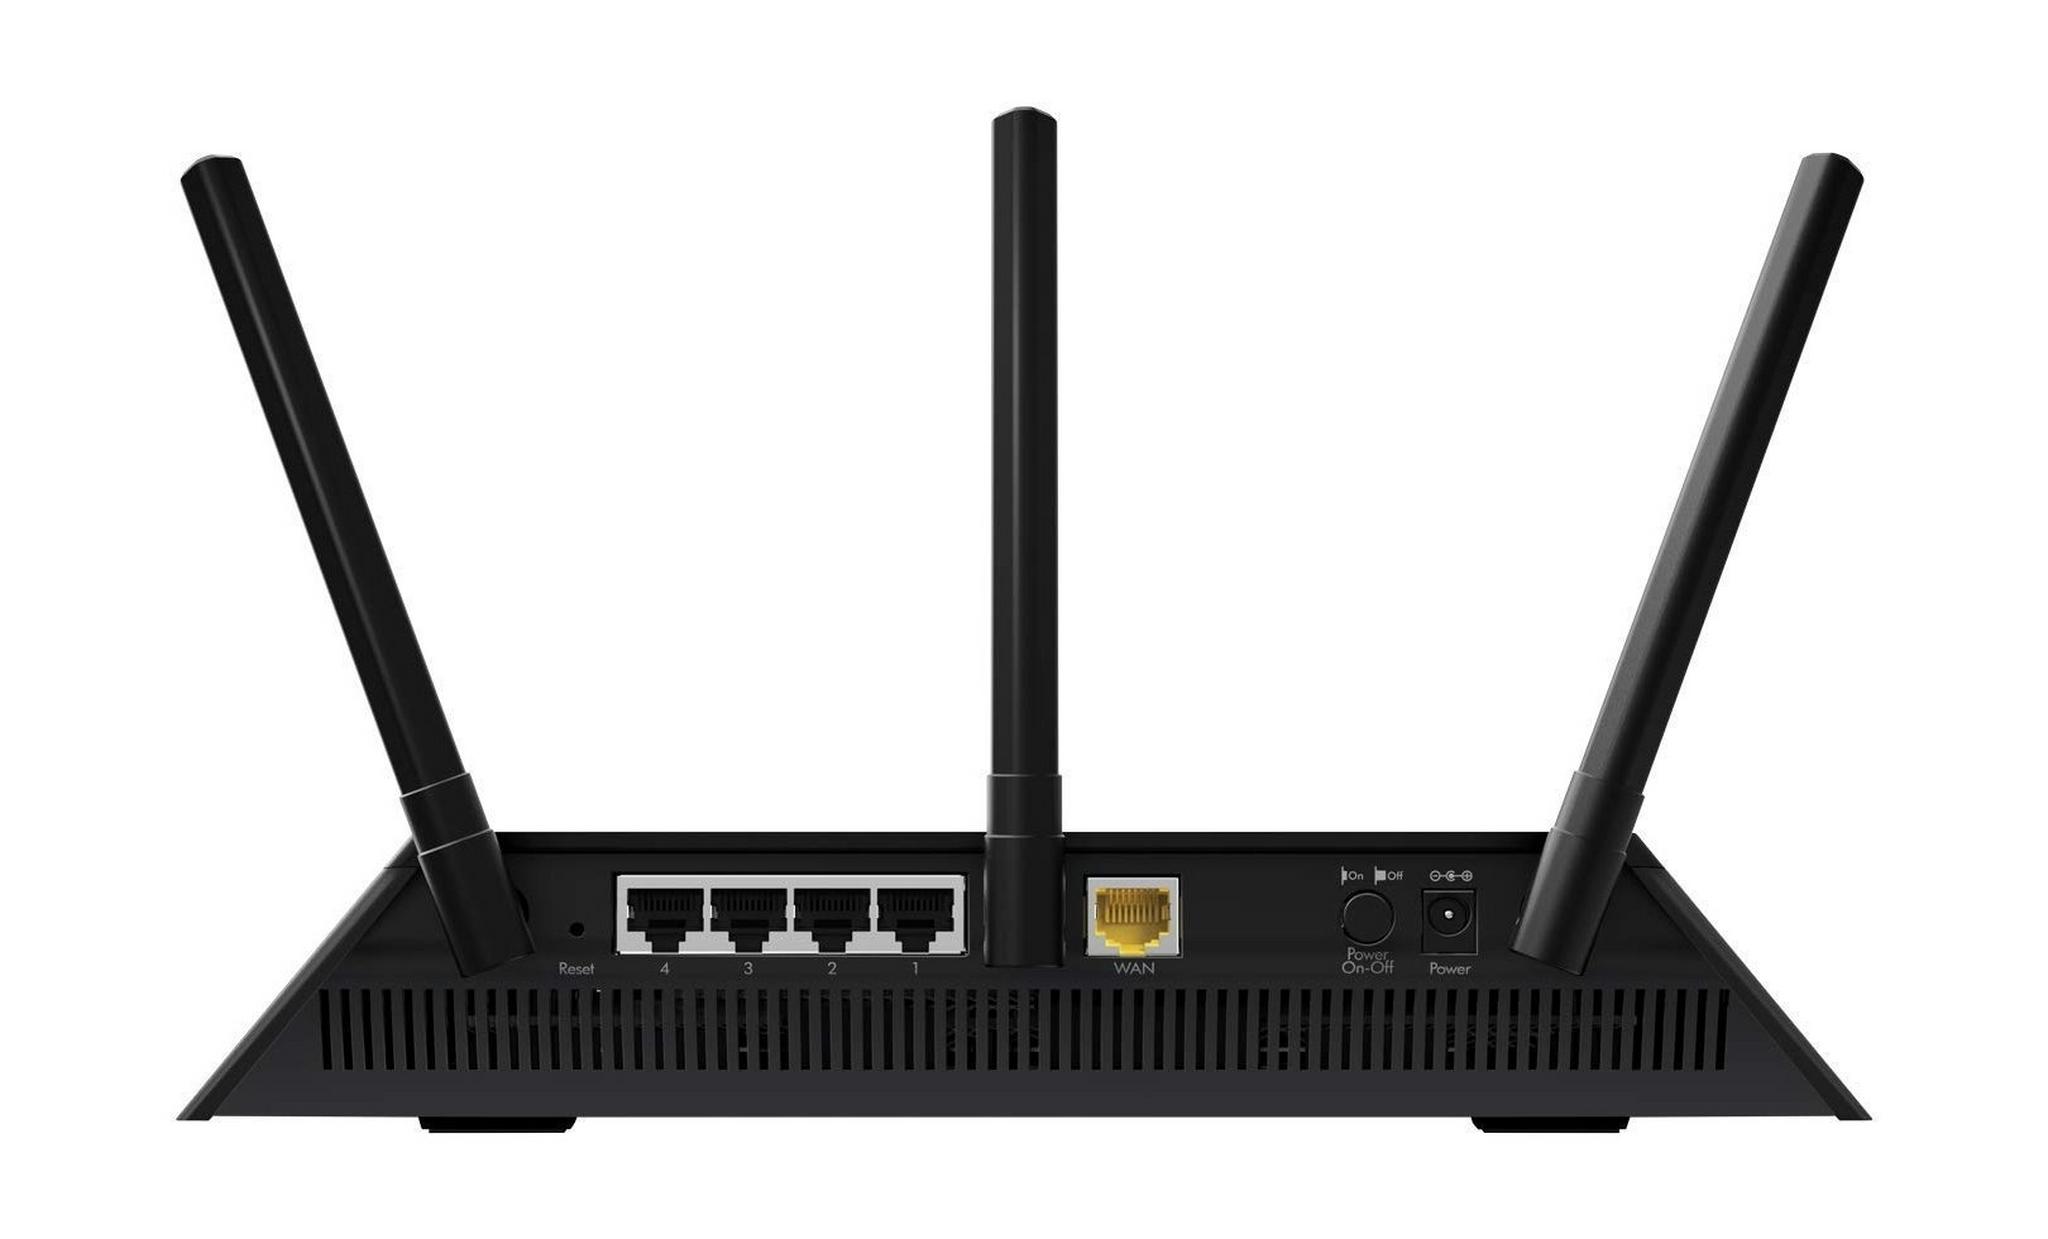 Netgear Nighthawk XR300 Pro Gaming WiFi Router - Black